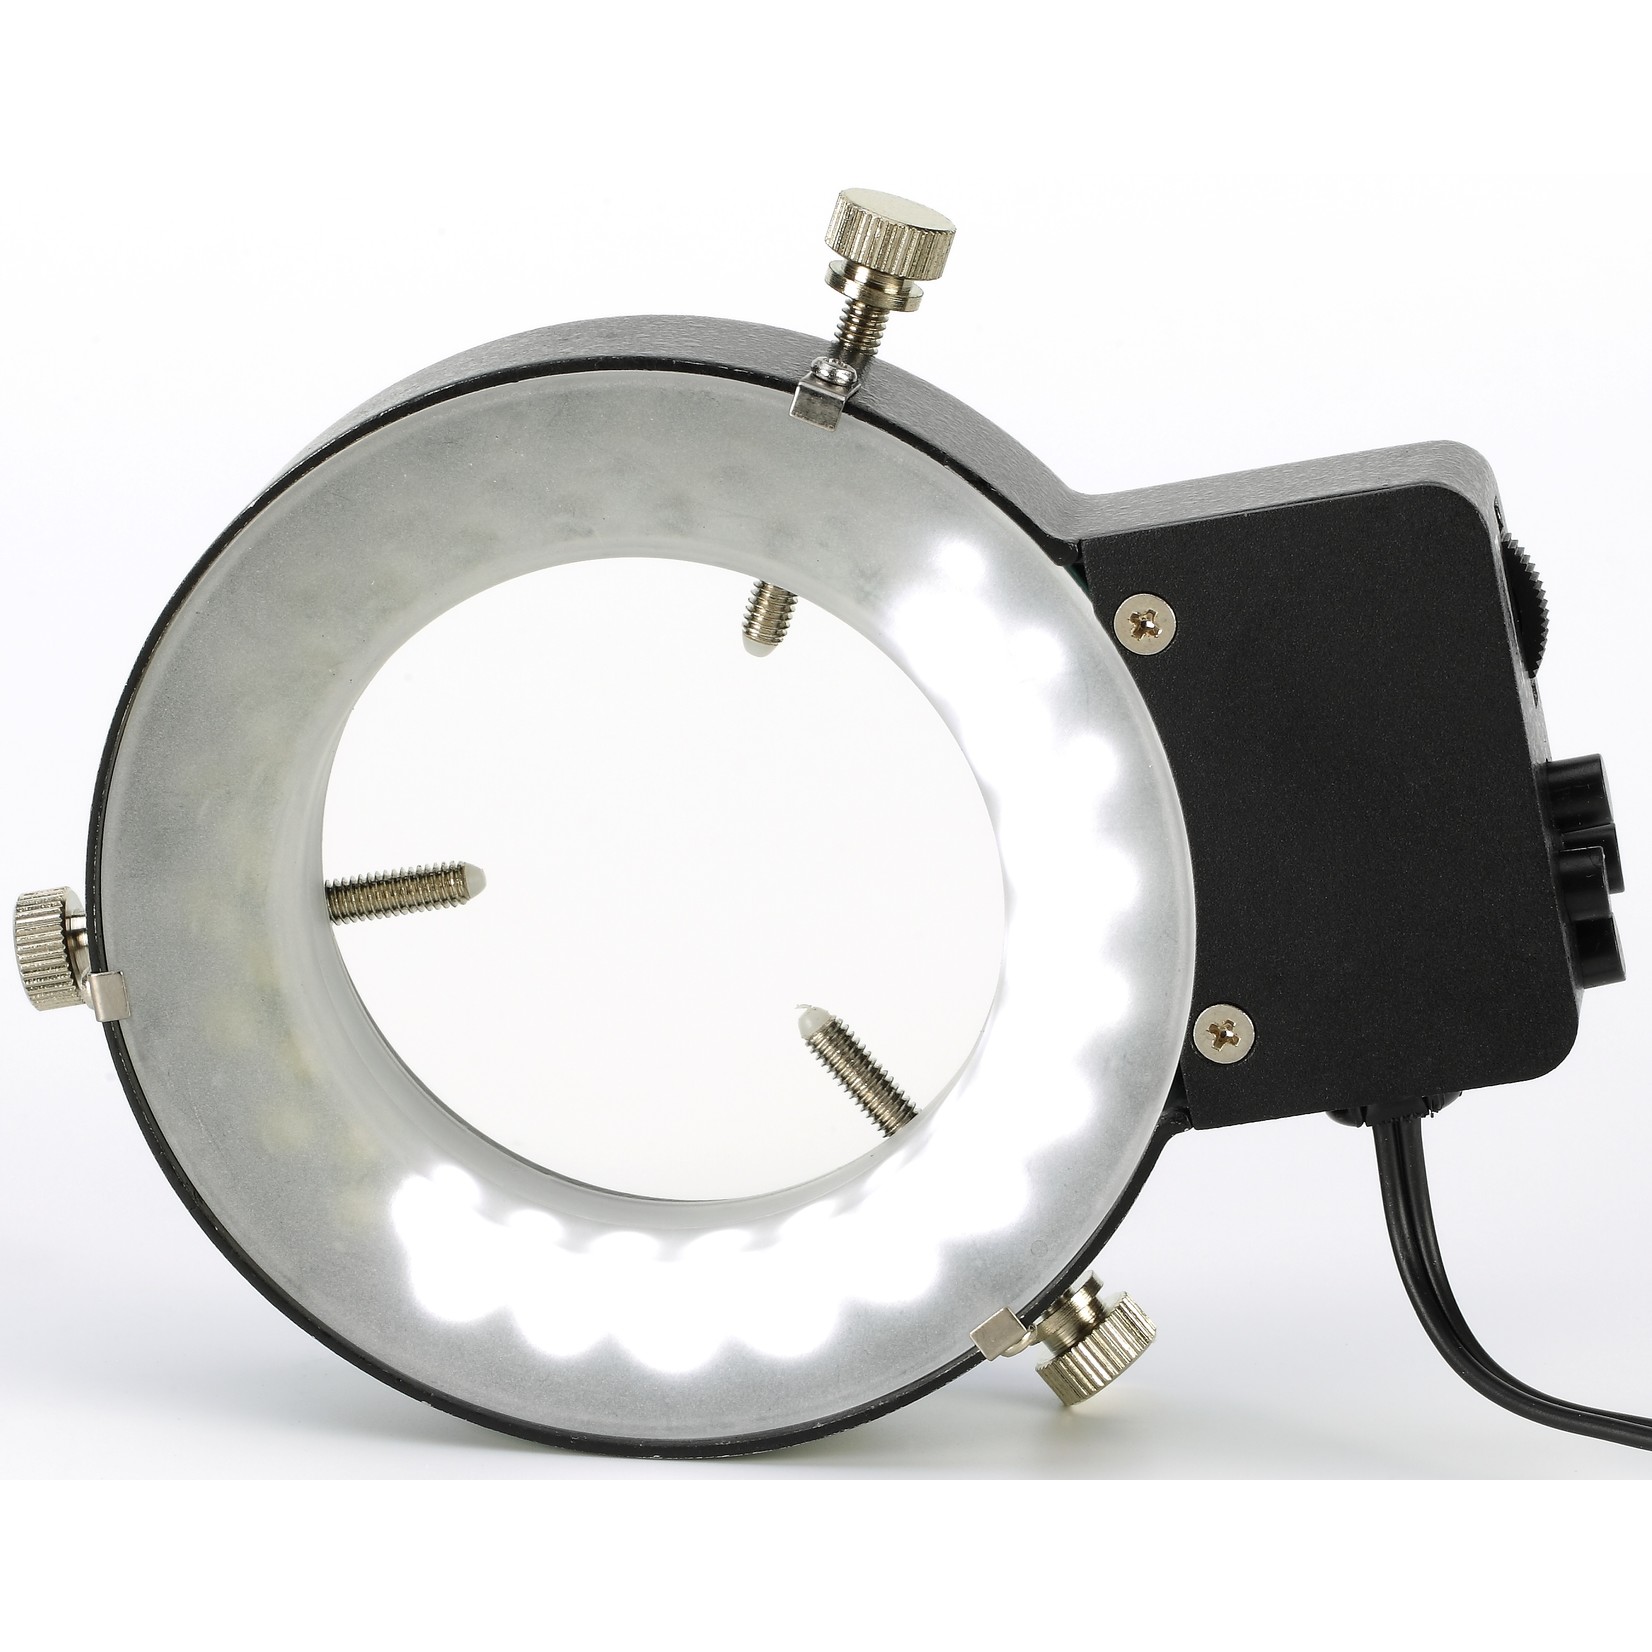 Anillo de luz LED con 144 LEDs, difusor, regulación y conmutación de segmentos